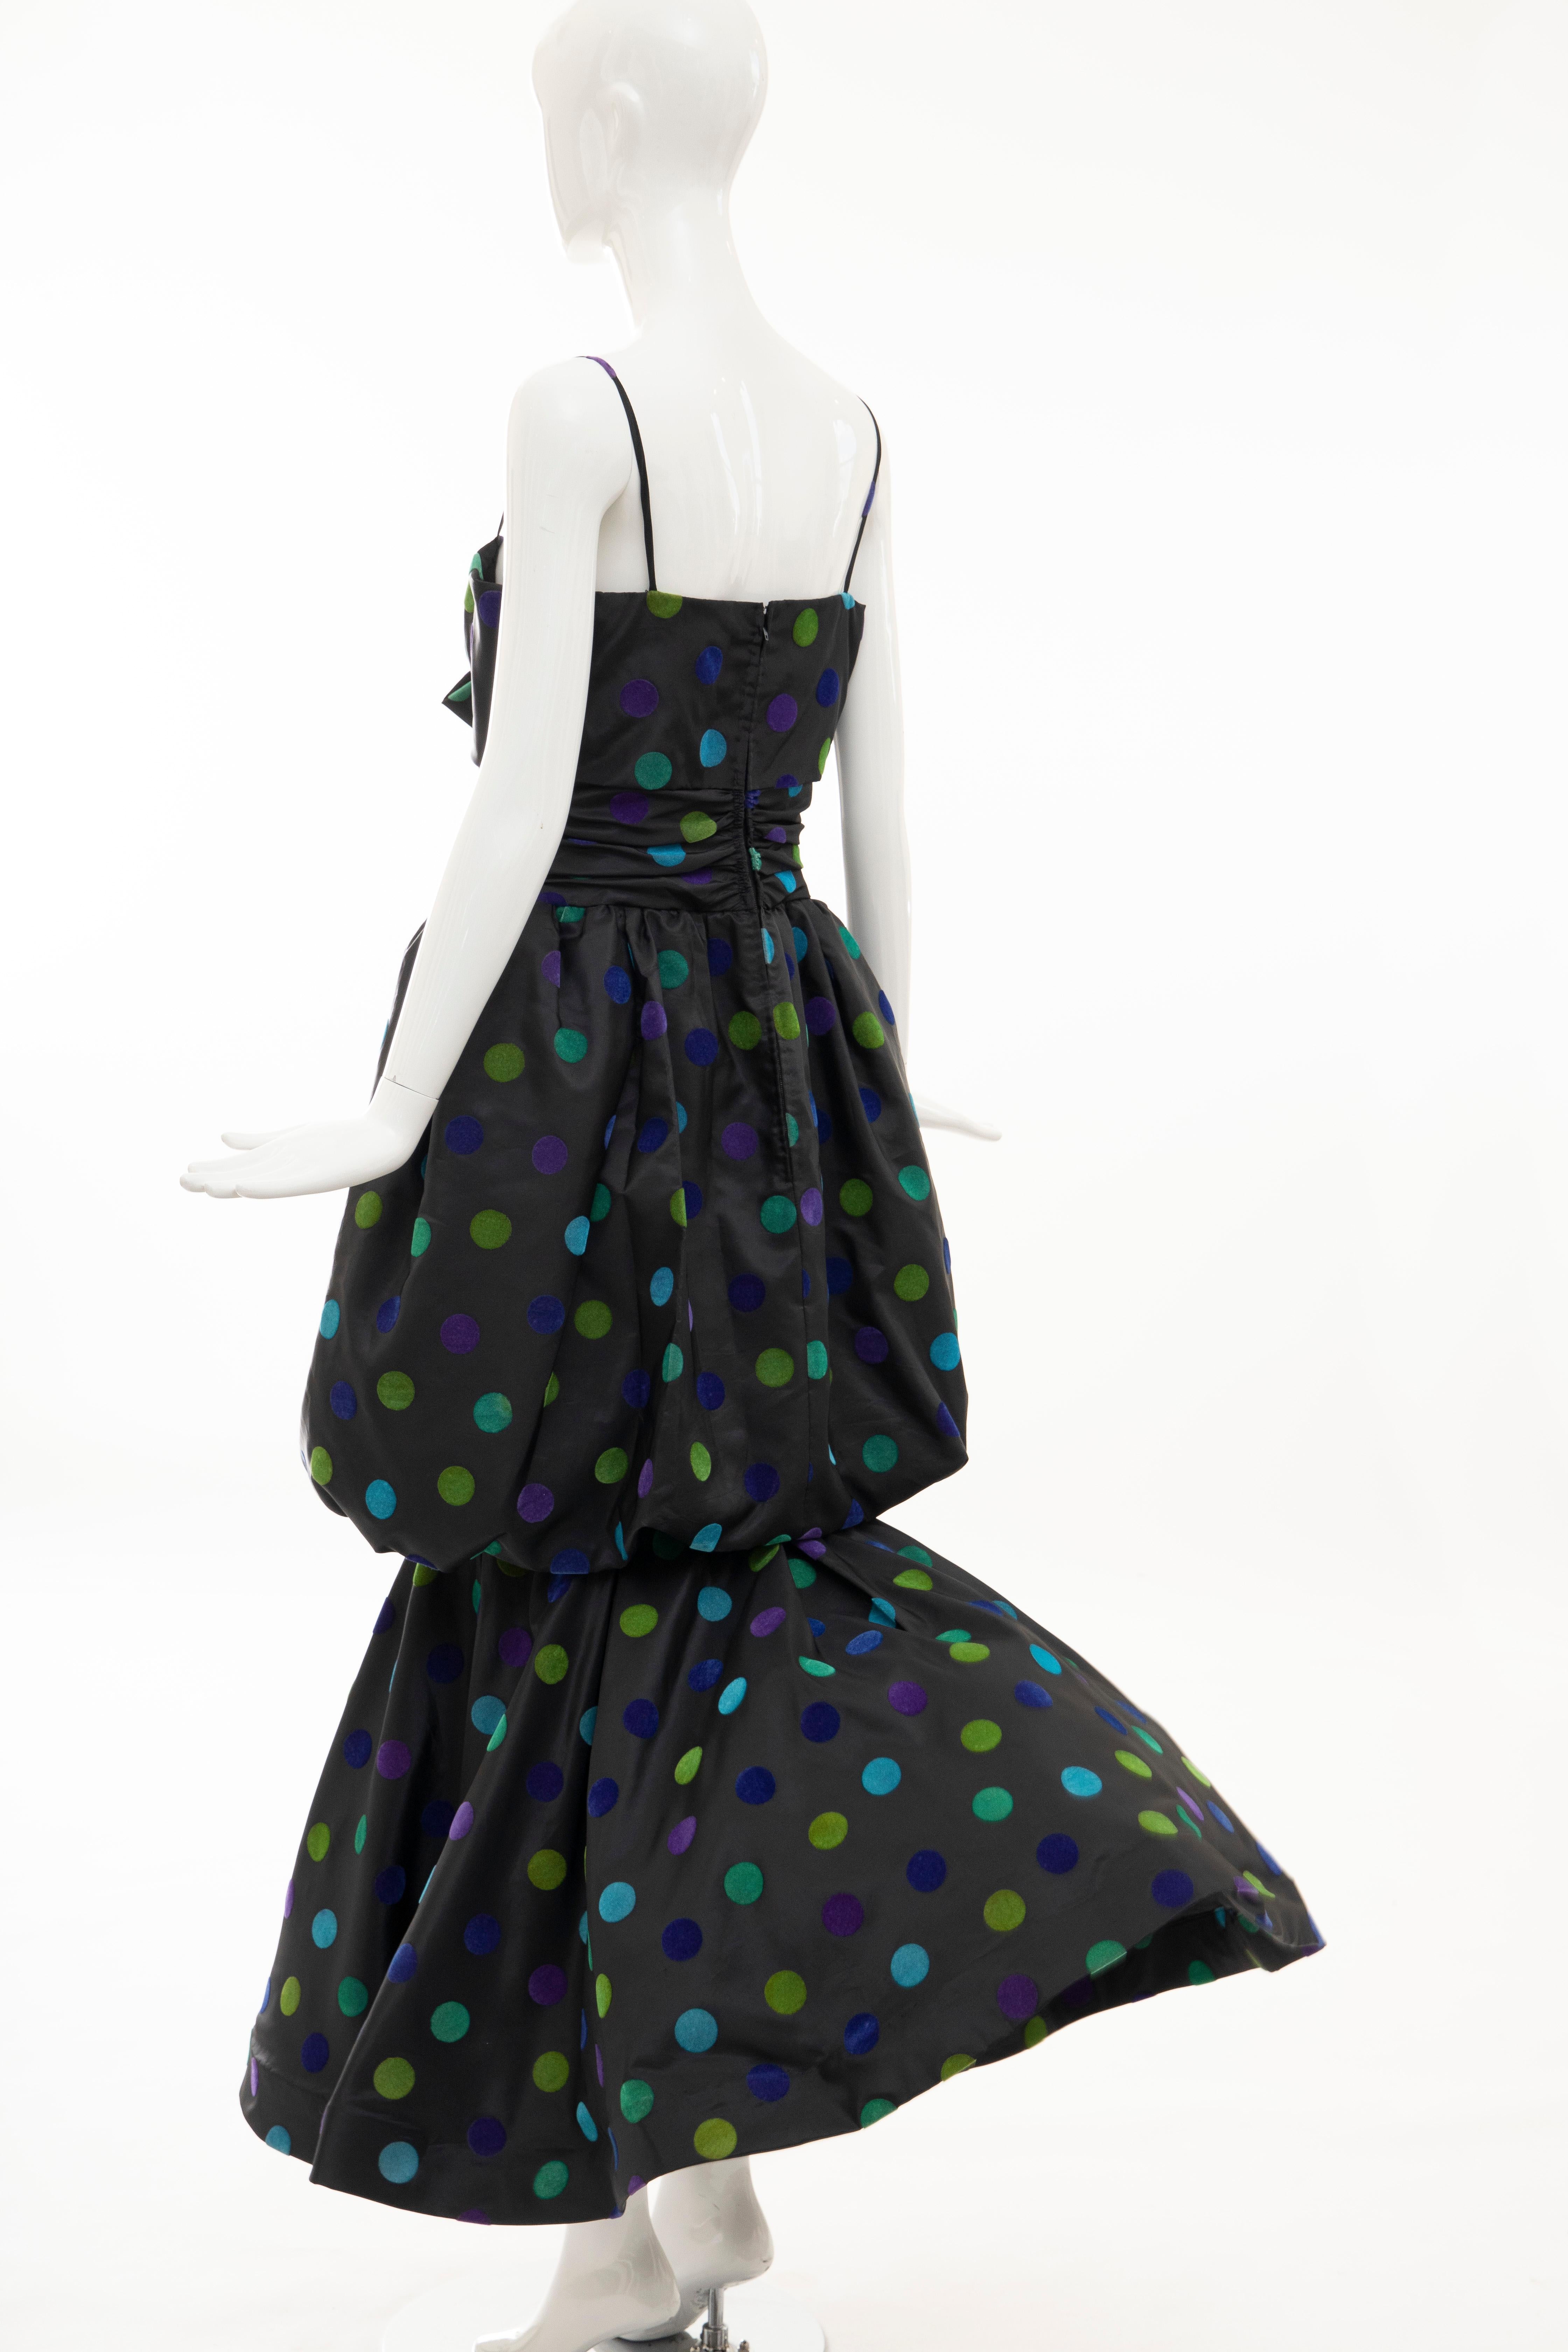 Nina Ricci Black Taffeta Velveteen Polka Dots Evening Dress, Circa: 1980s 9